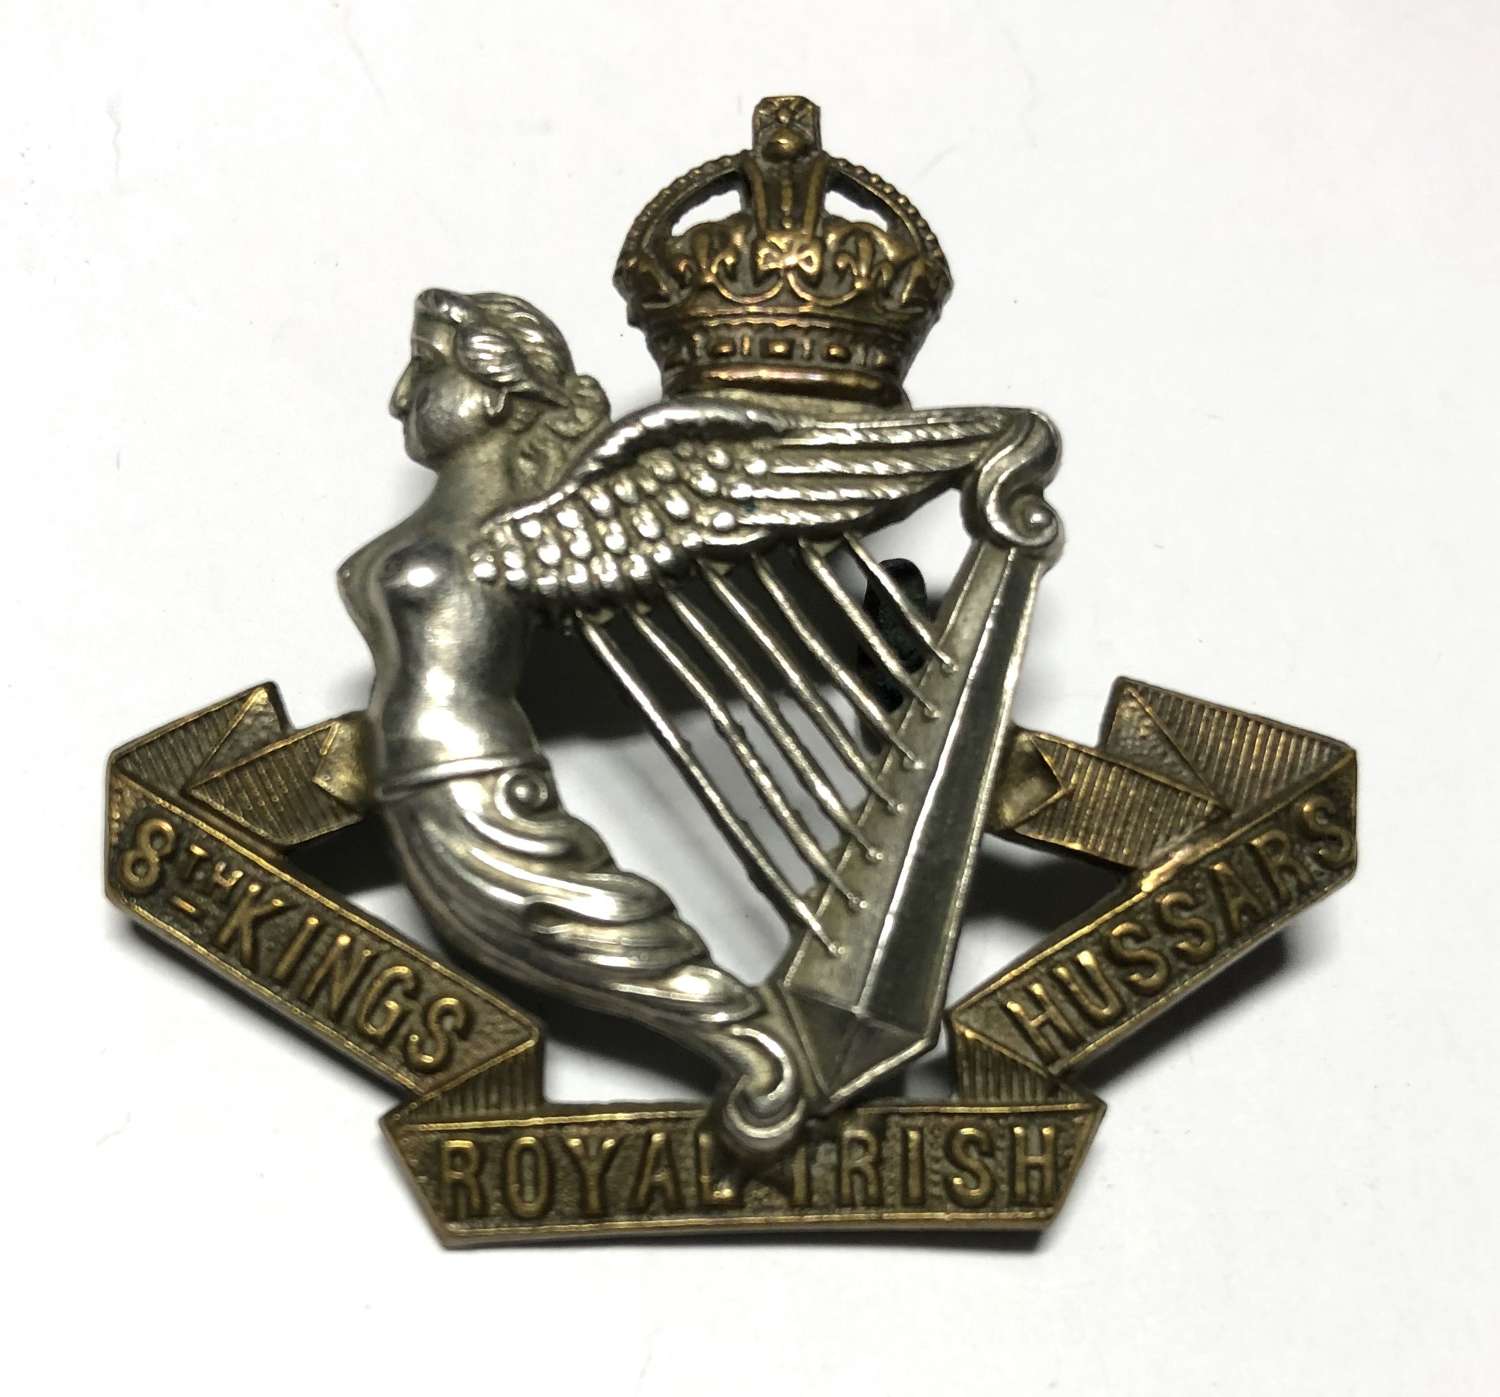 8th King’s Royal Irish Hussars Victorian cap badge circa 1901-52